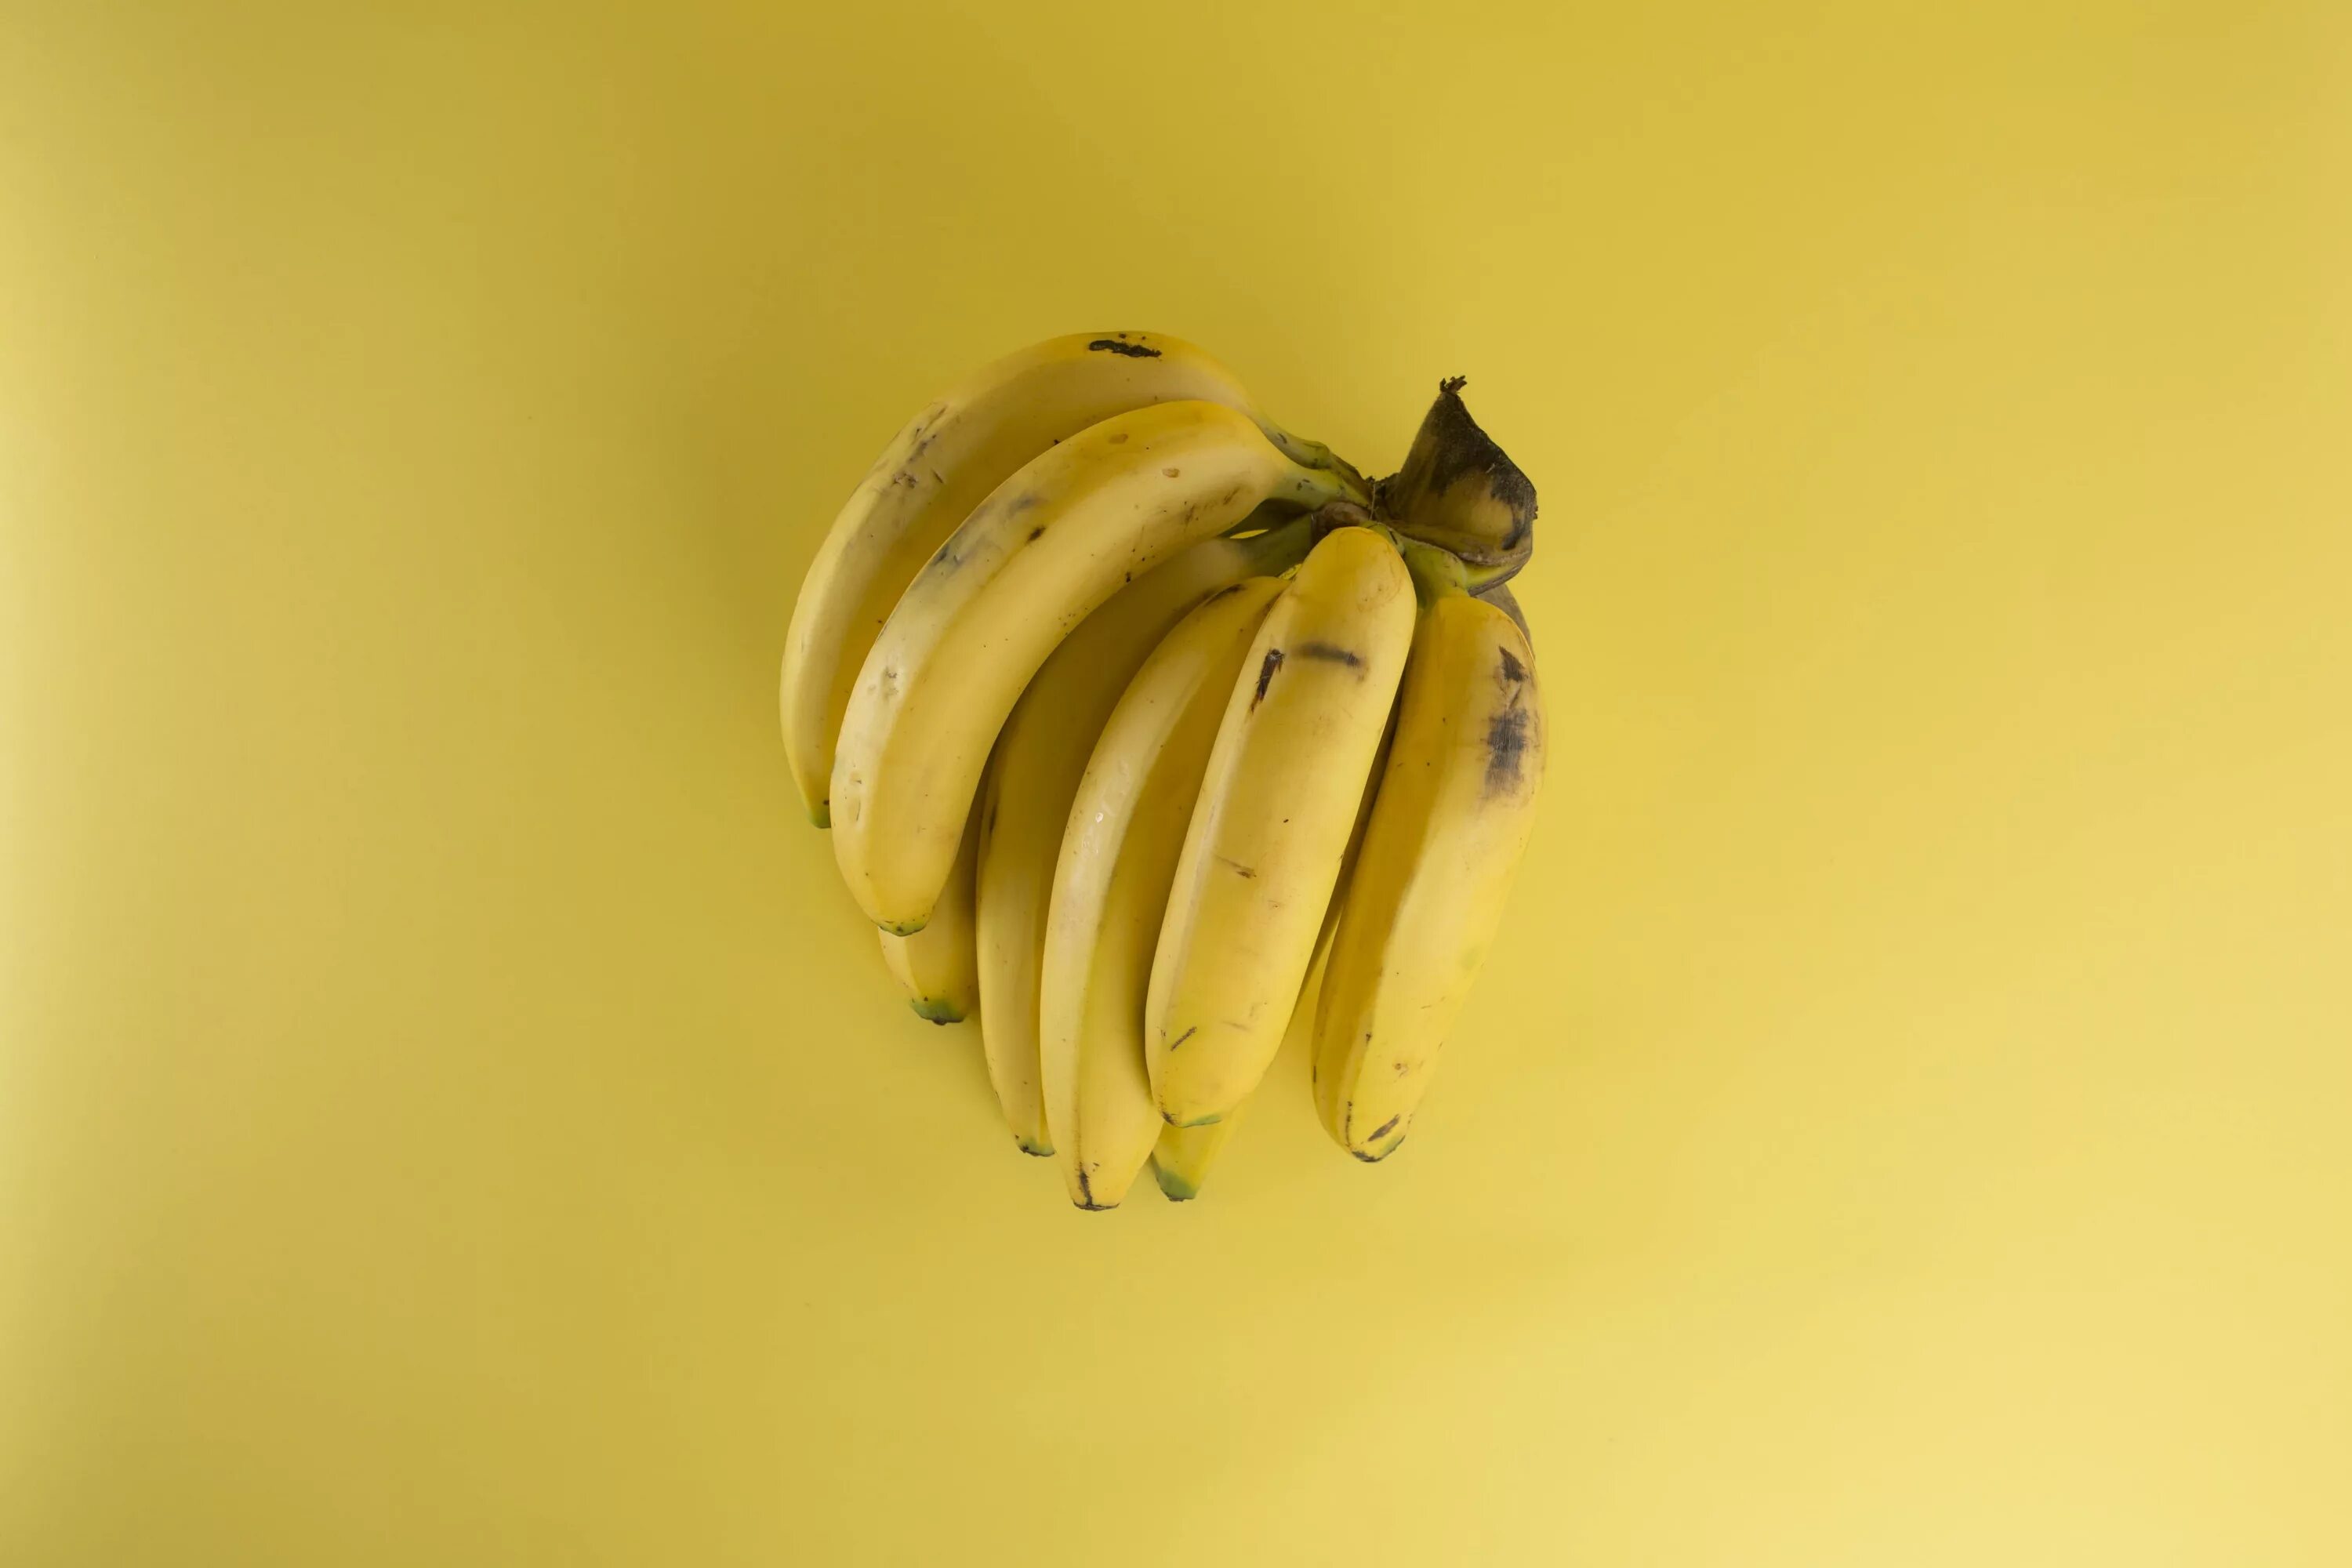 Https muz. Спелый банан. Красивый банан. Желтый банан. Макросъемка банана.